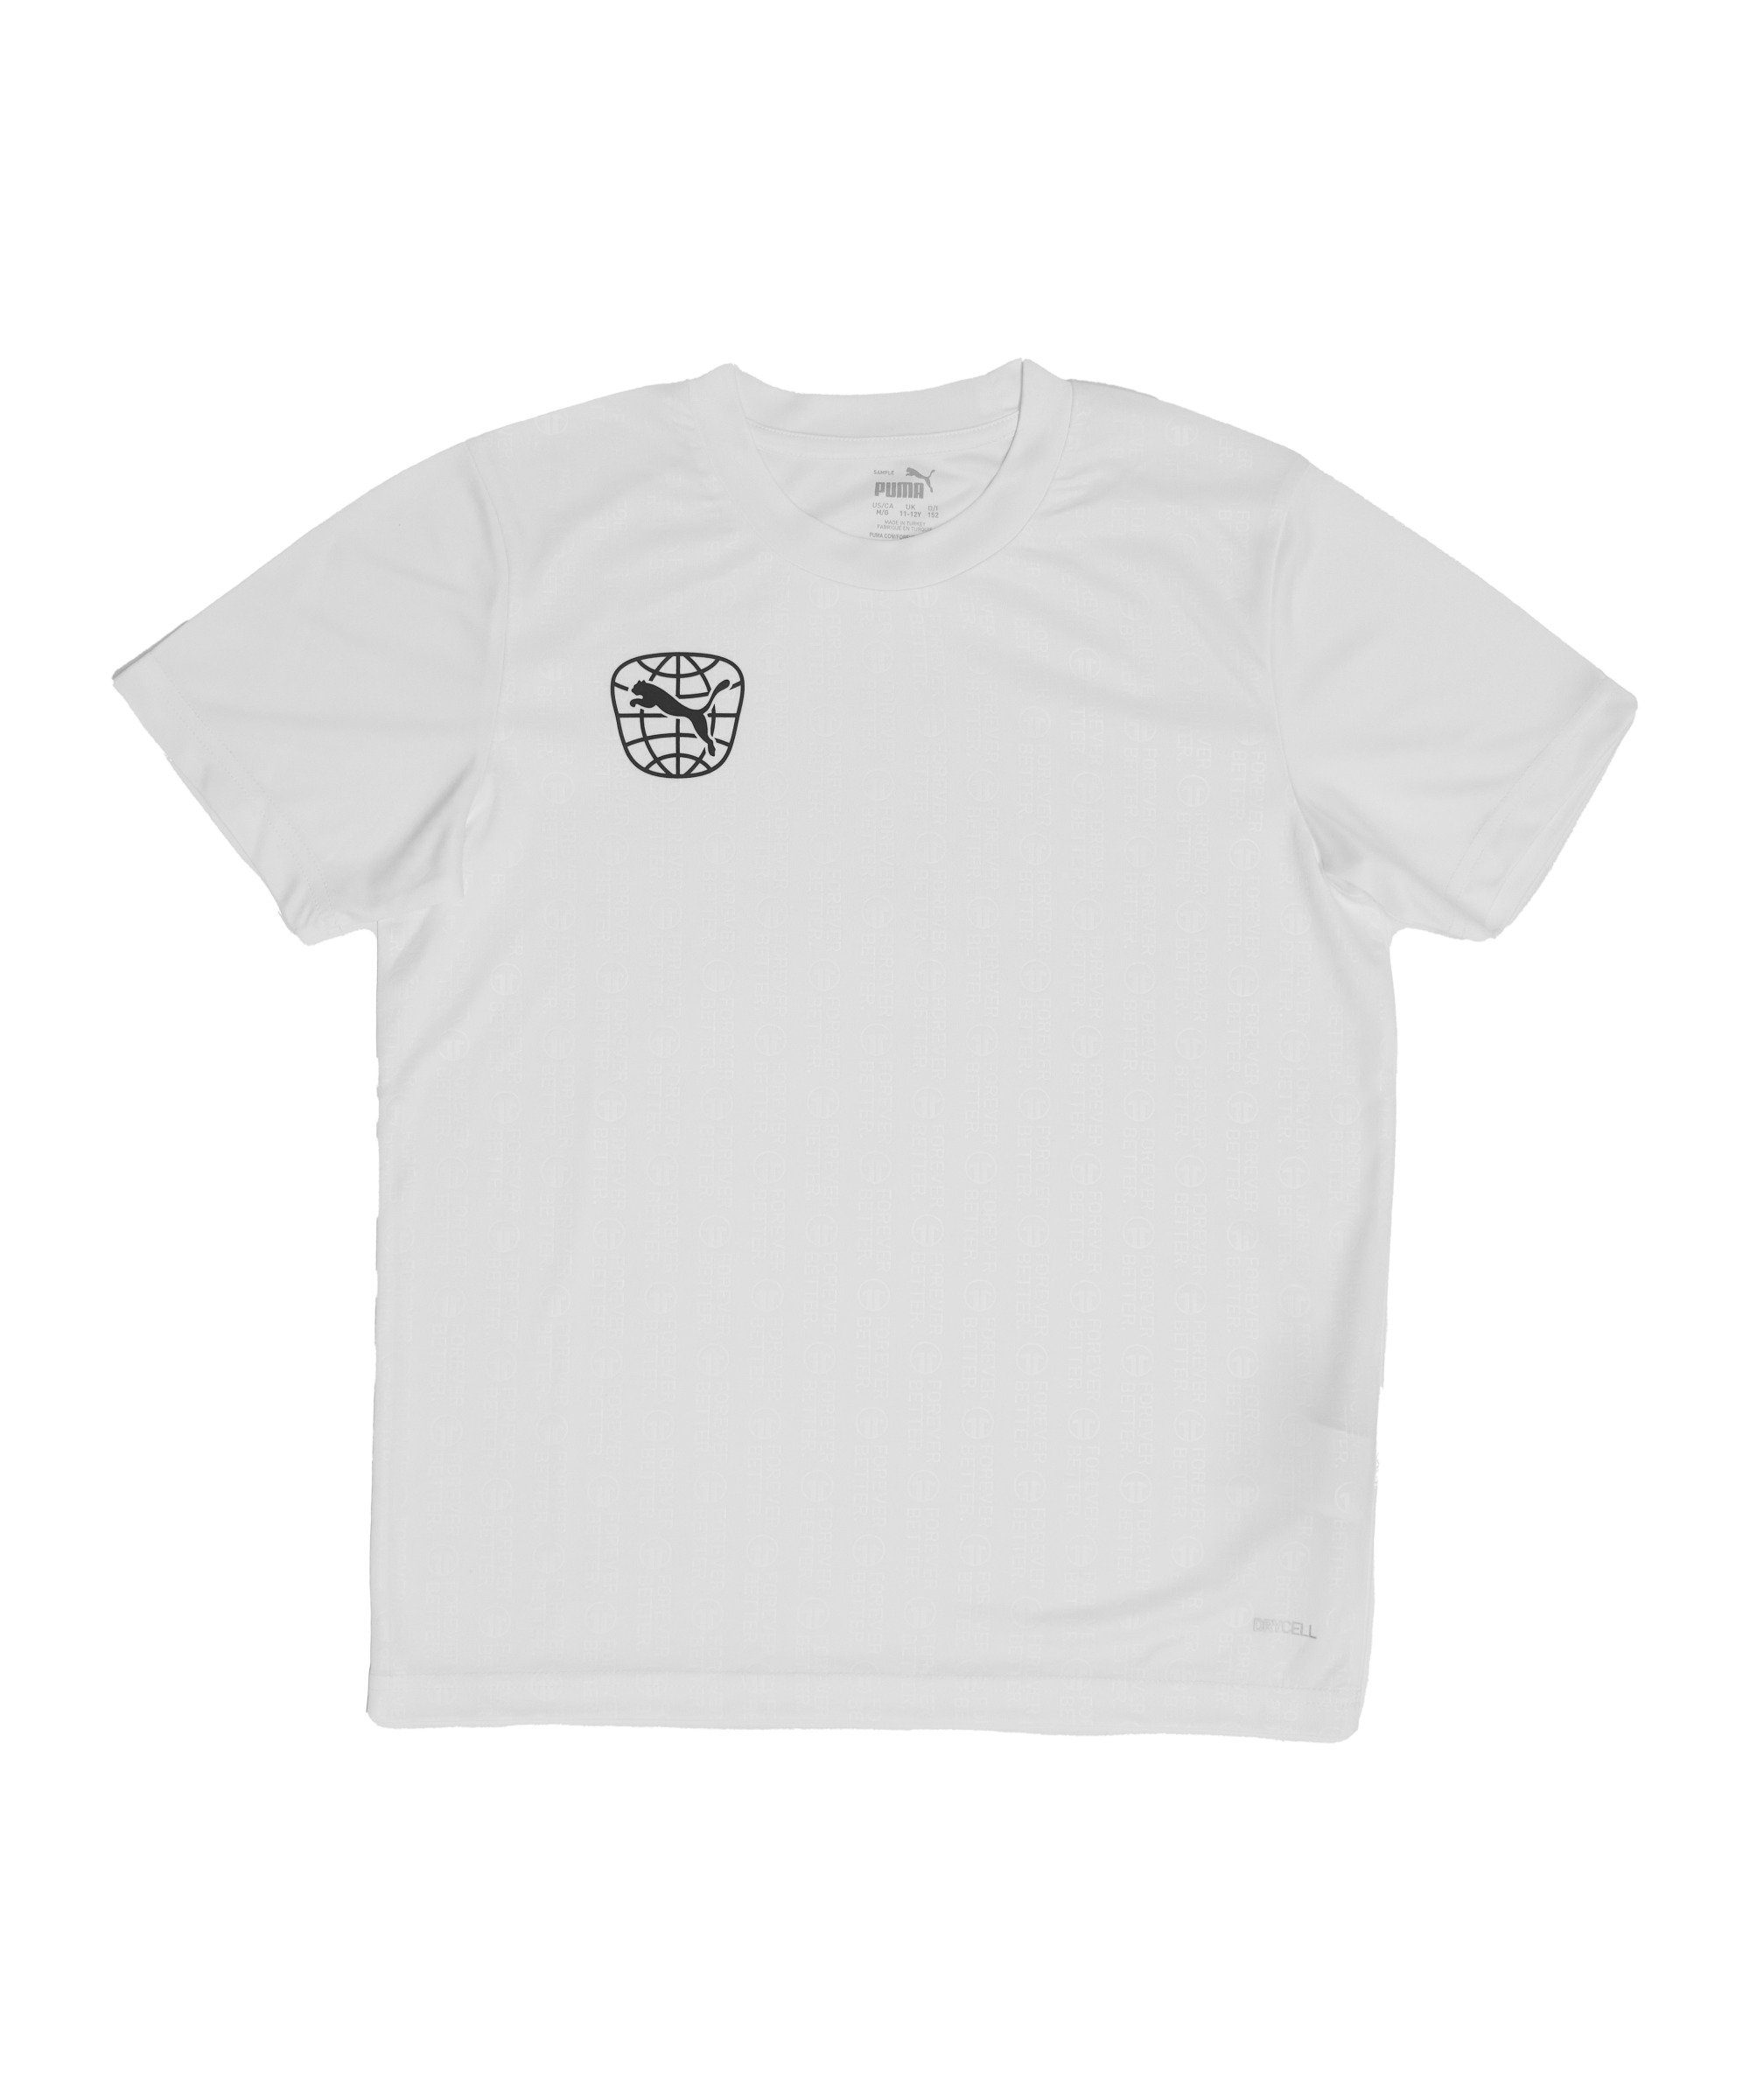 PUMA T-Shirt re:fibre Trikot Kids default